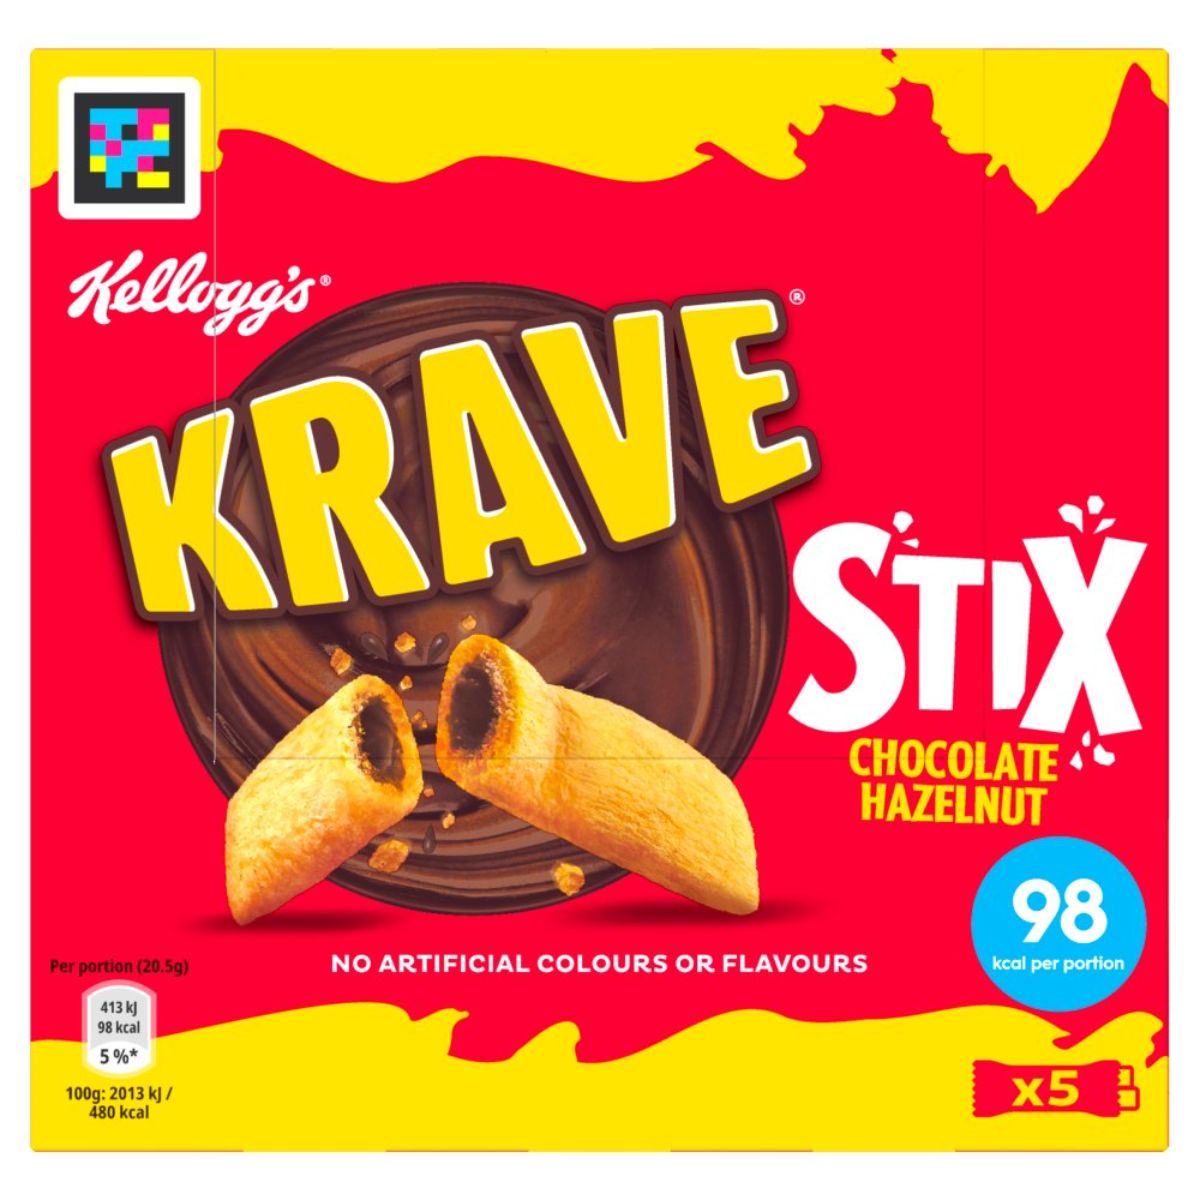 A box of Kelloggs - Krave Chocolate Hazelnut Stix Snack Bars - 5 x 20.5g maltesers.